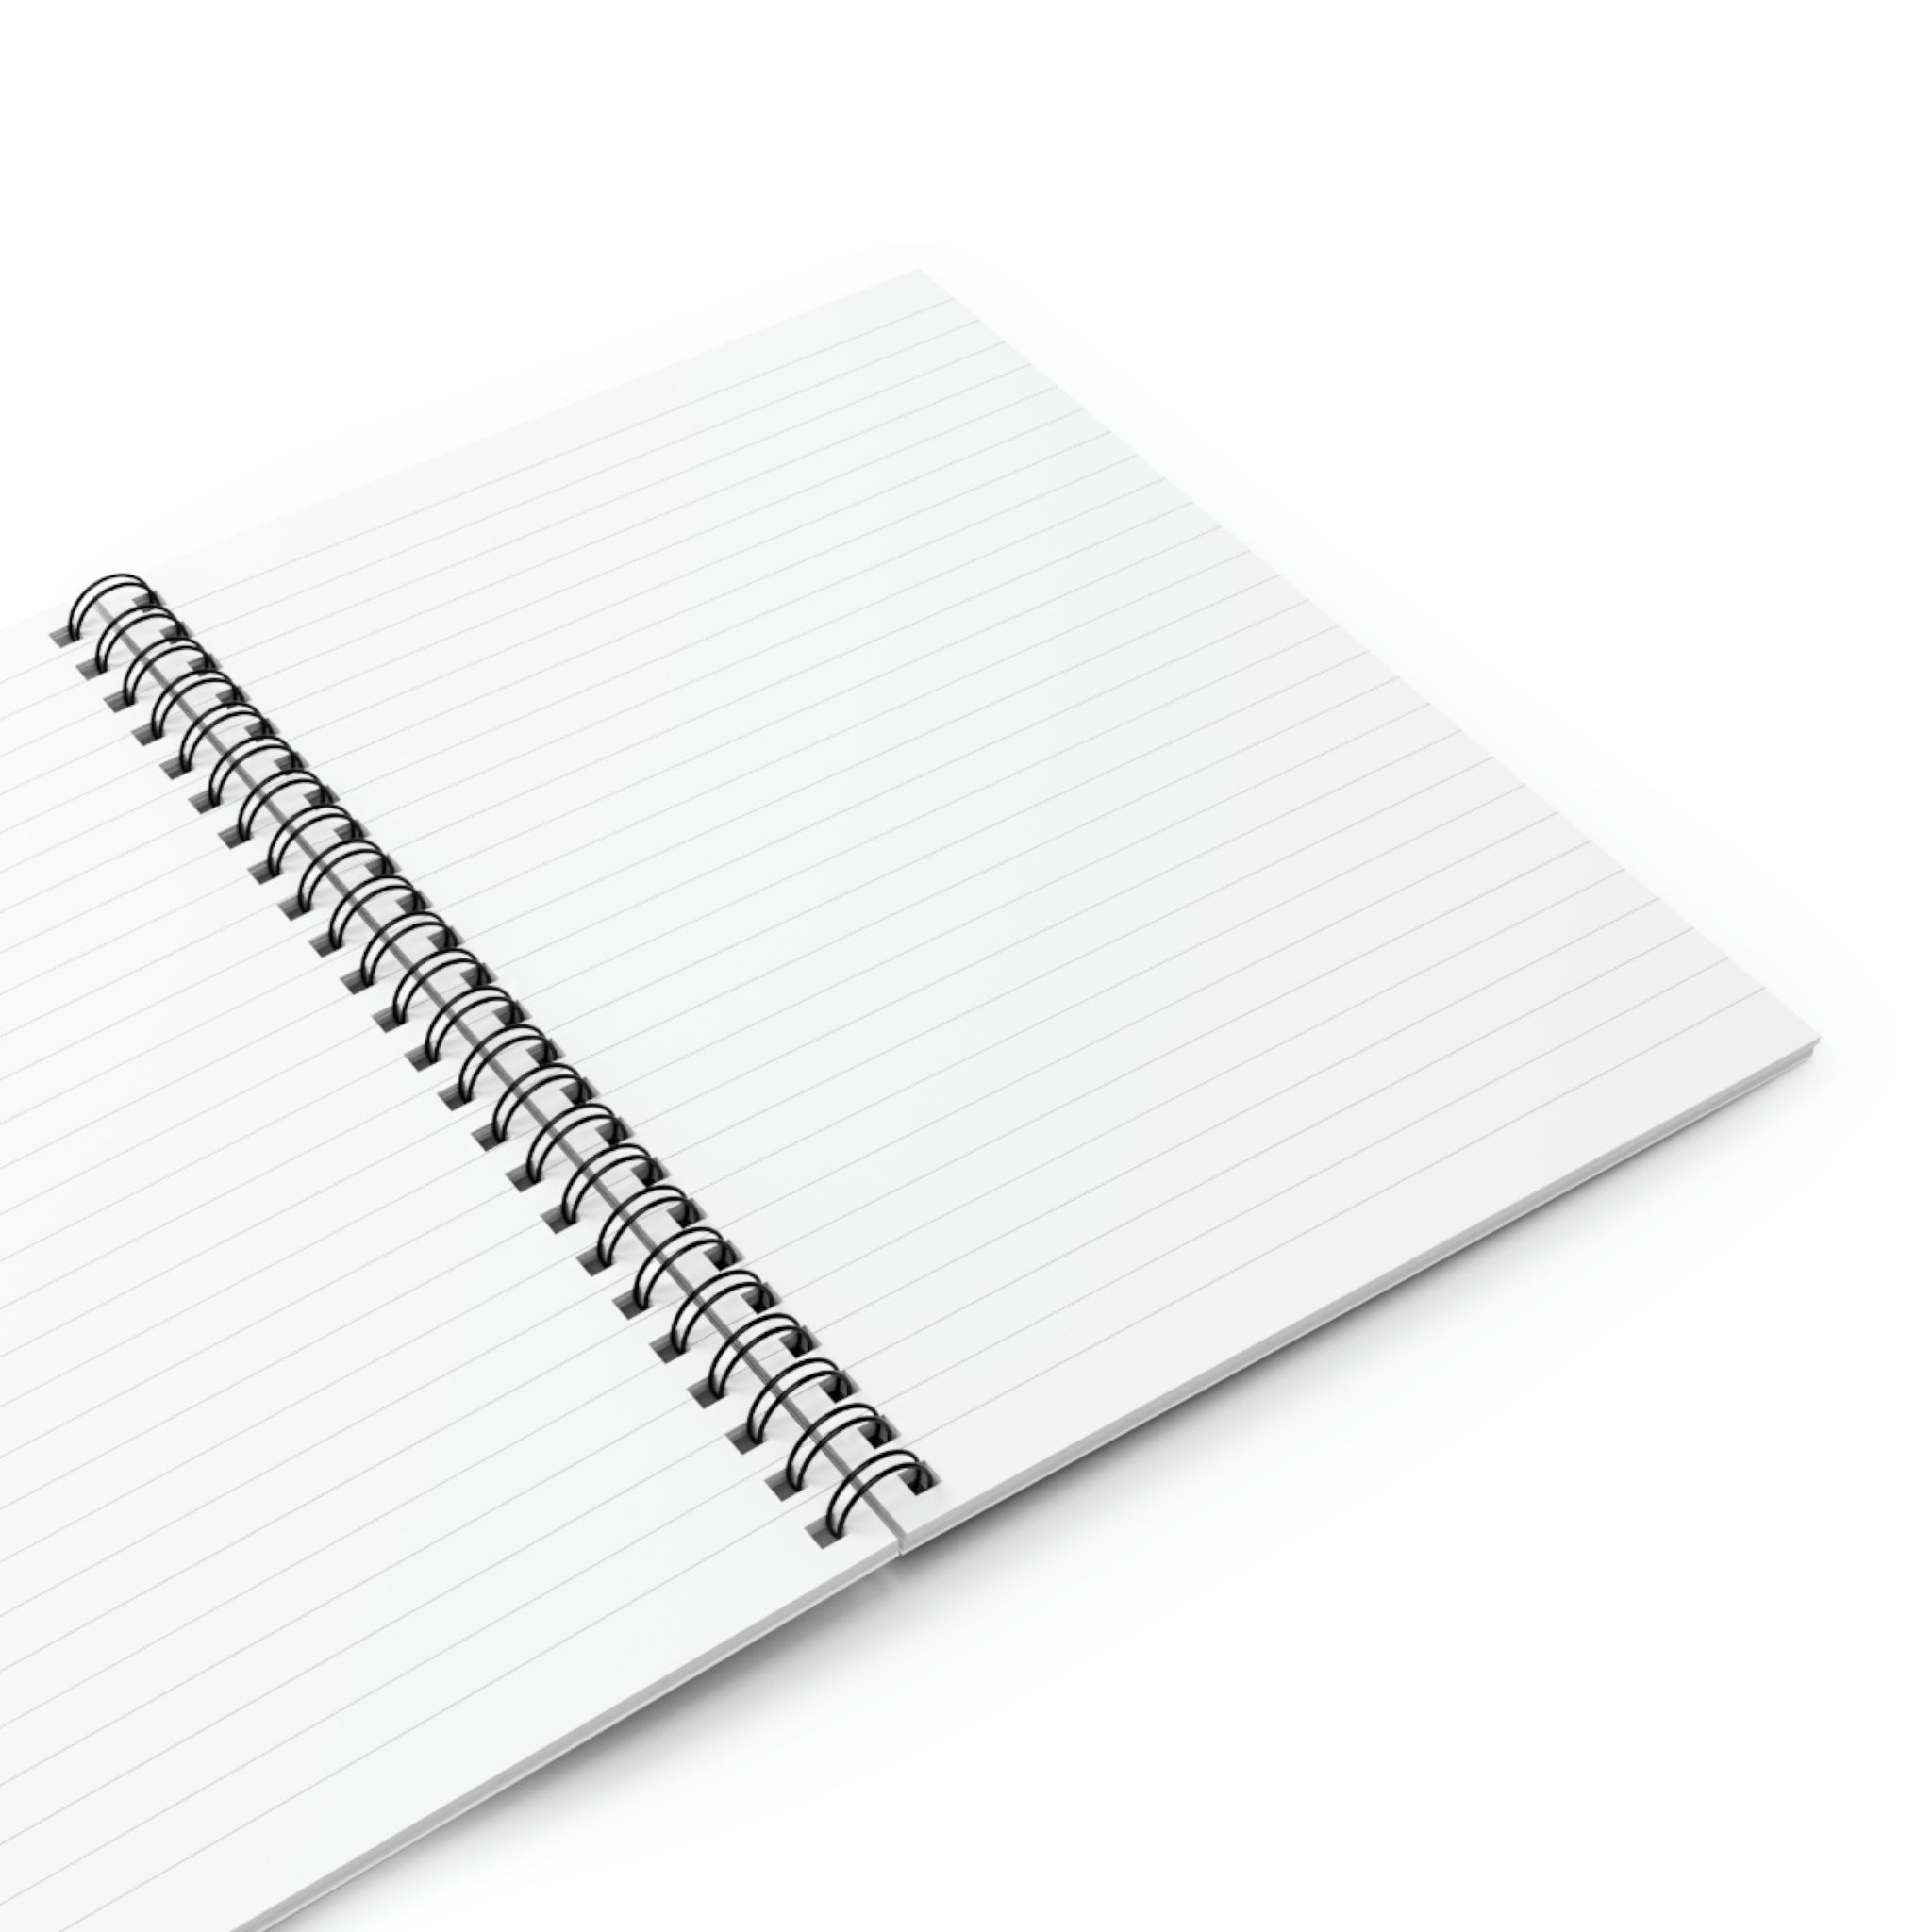 Cabin Spiral Notebook - Ruled Line